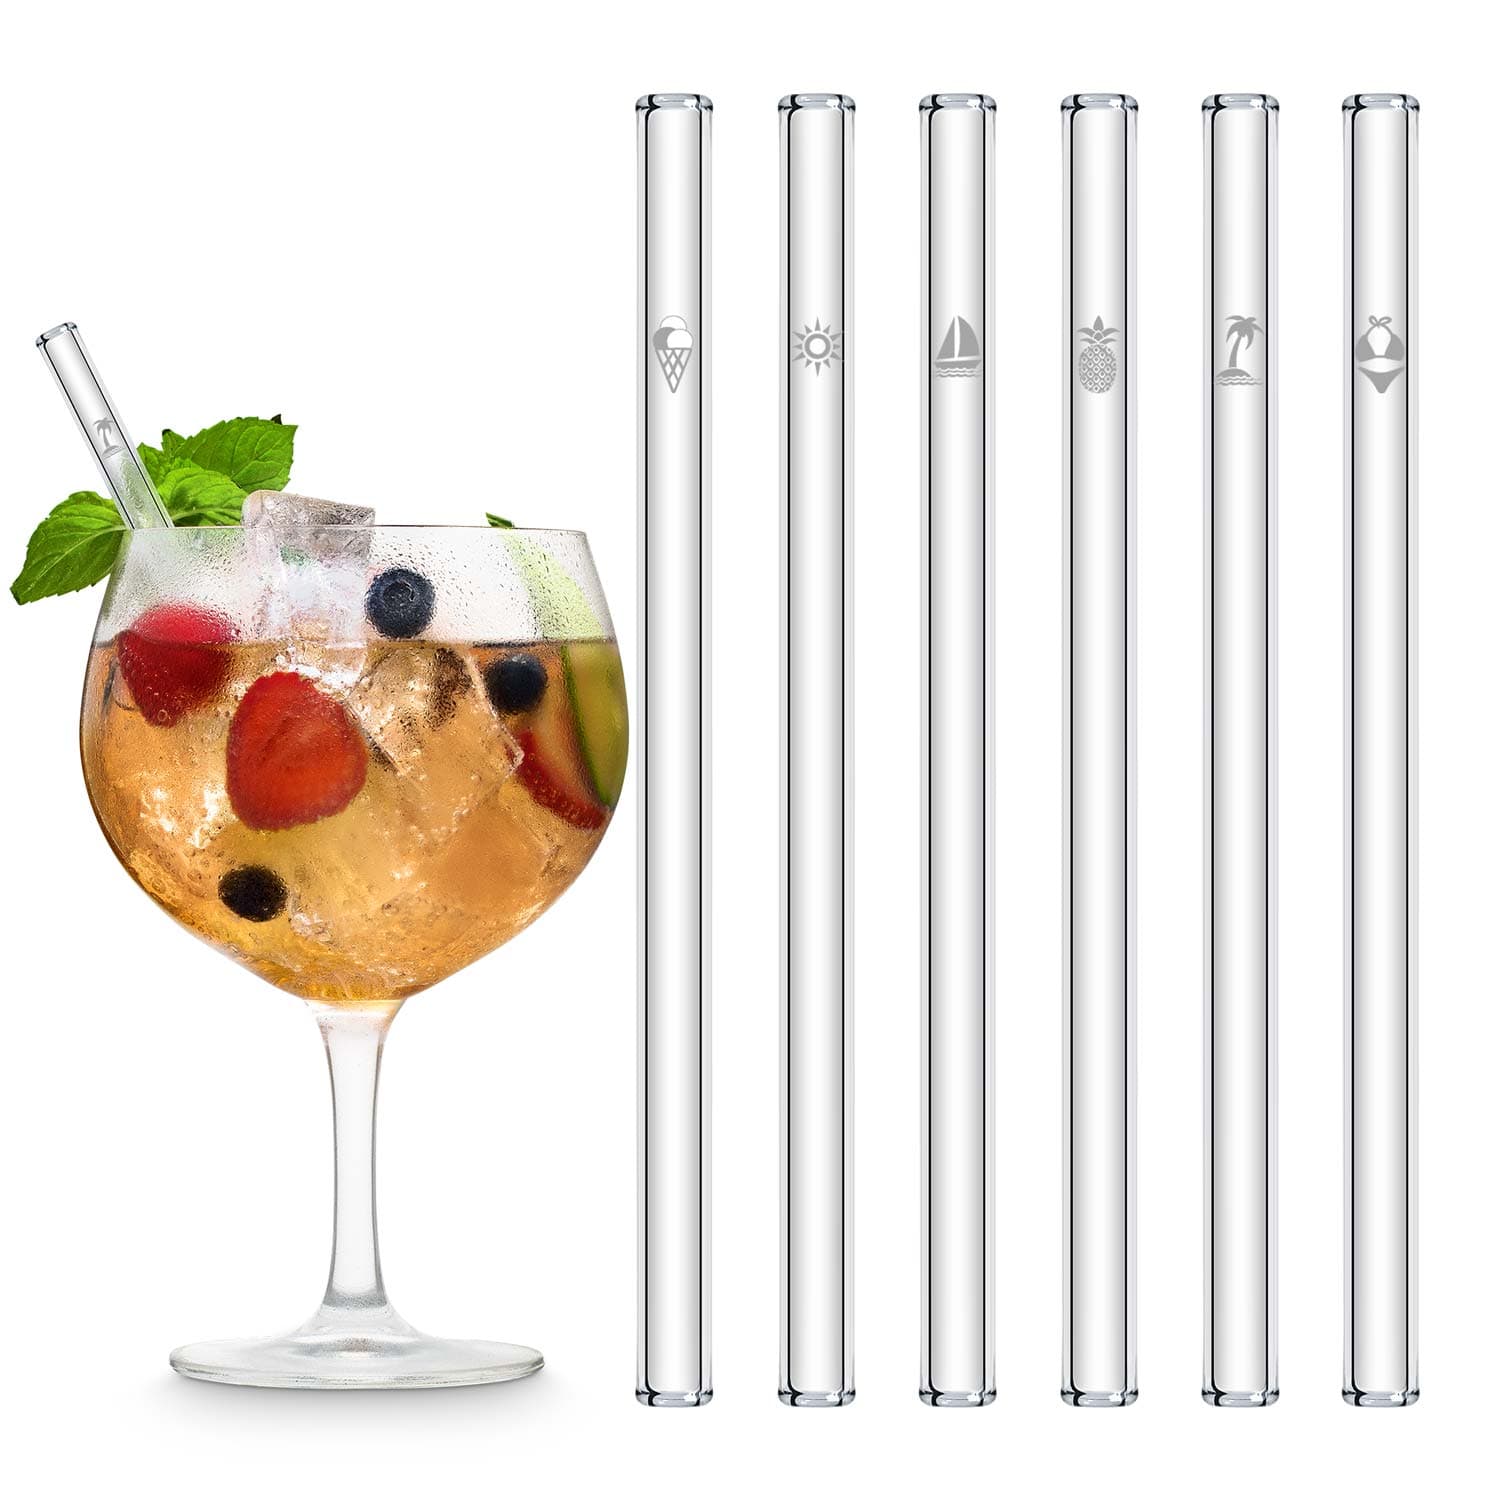 HALM Summer Edition 6x 20cm glass straws with engraving - HALM Straws